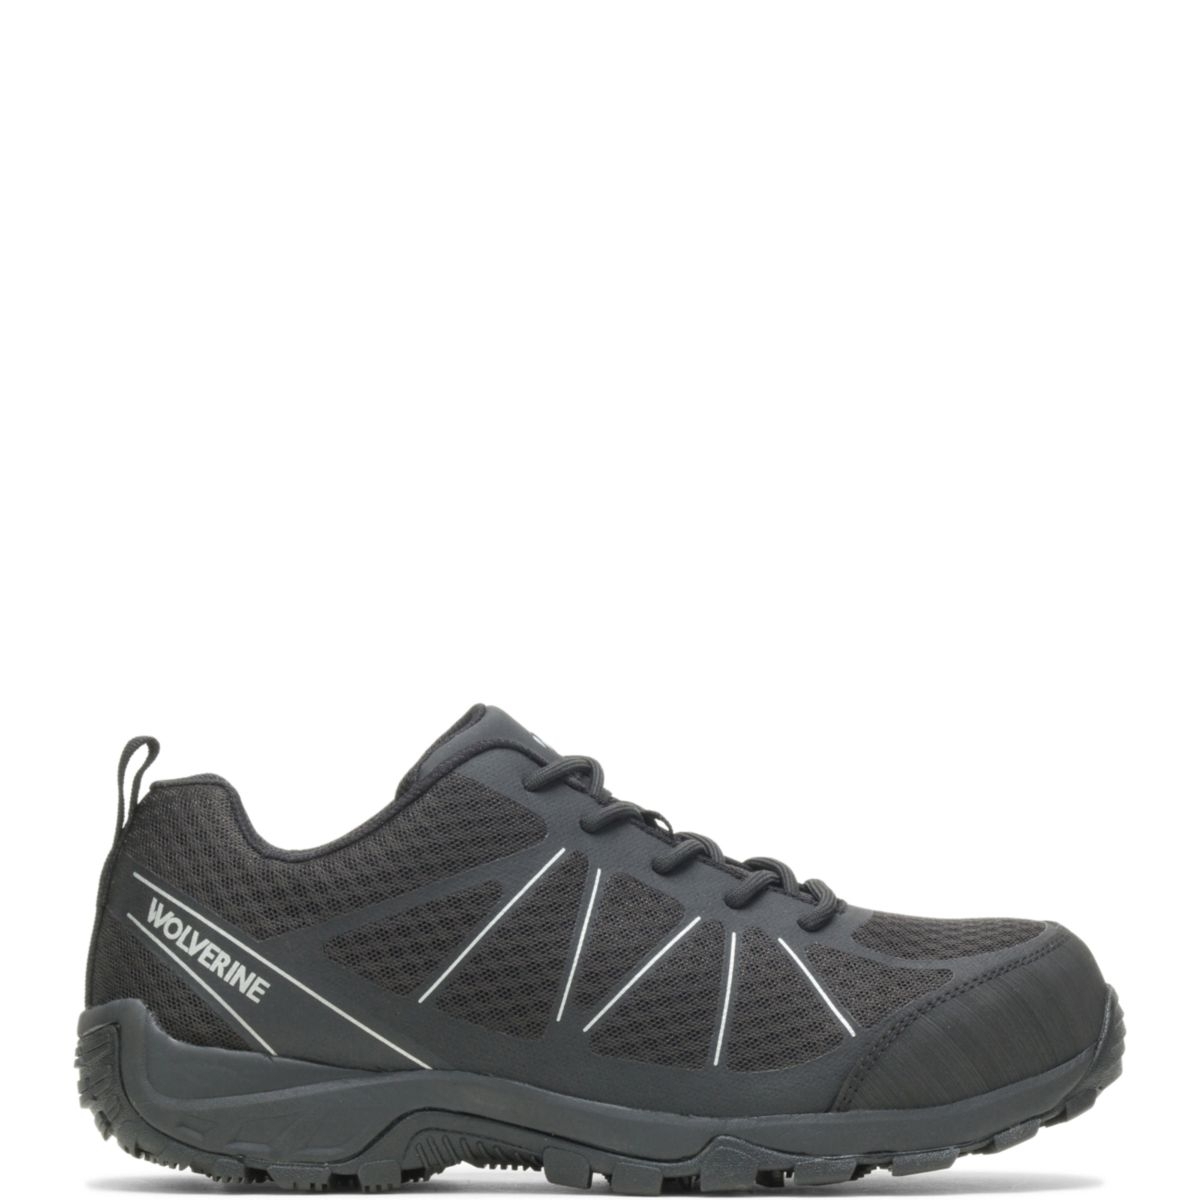 WOLVERINE Men's Amherst II CarbonMAXÂ® Composite Toe Work Shoe Black - W201147 BLACK - BLACK, 10.5 X-Wide